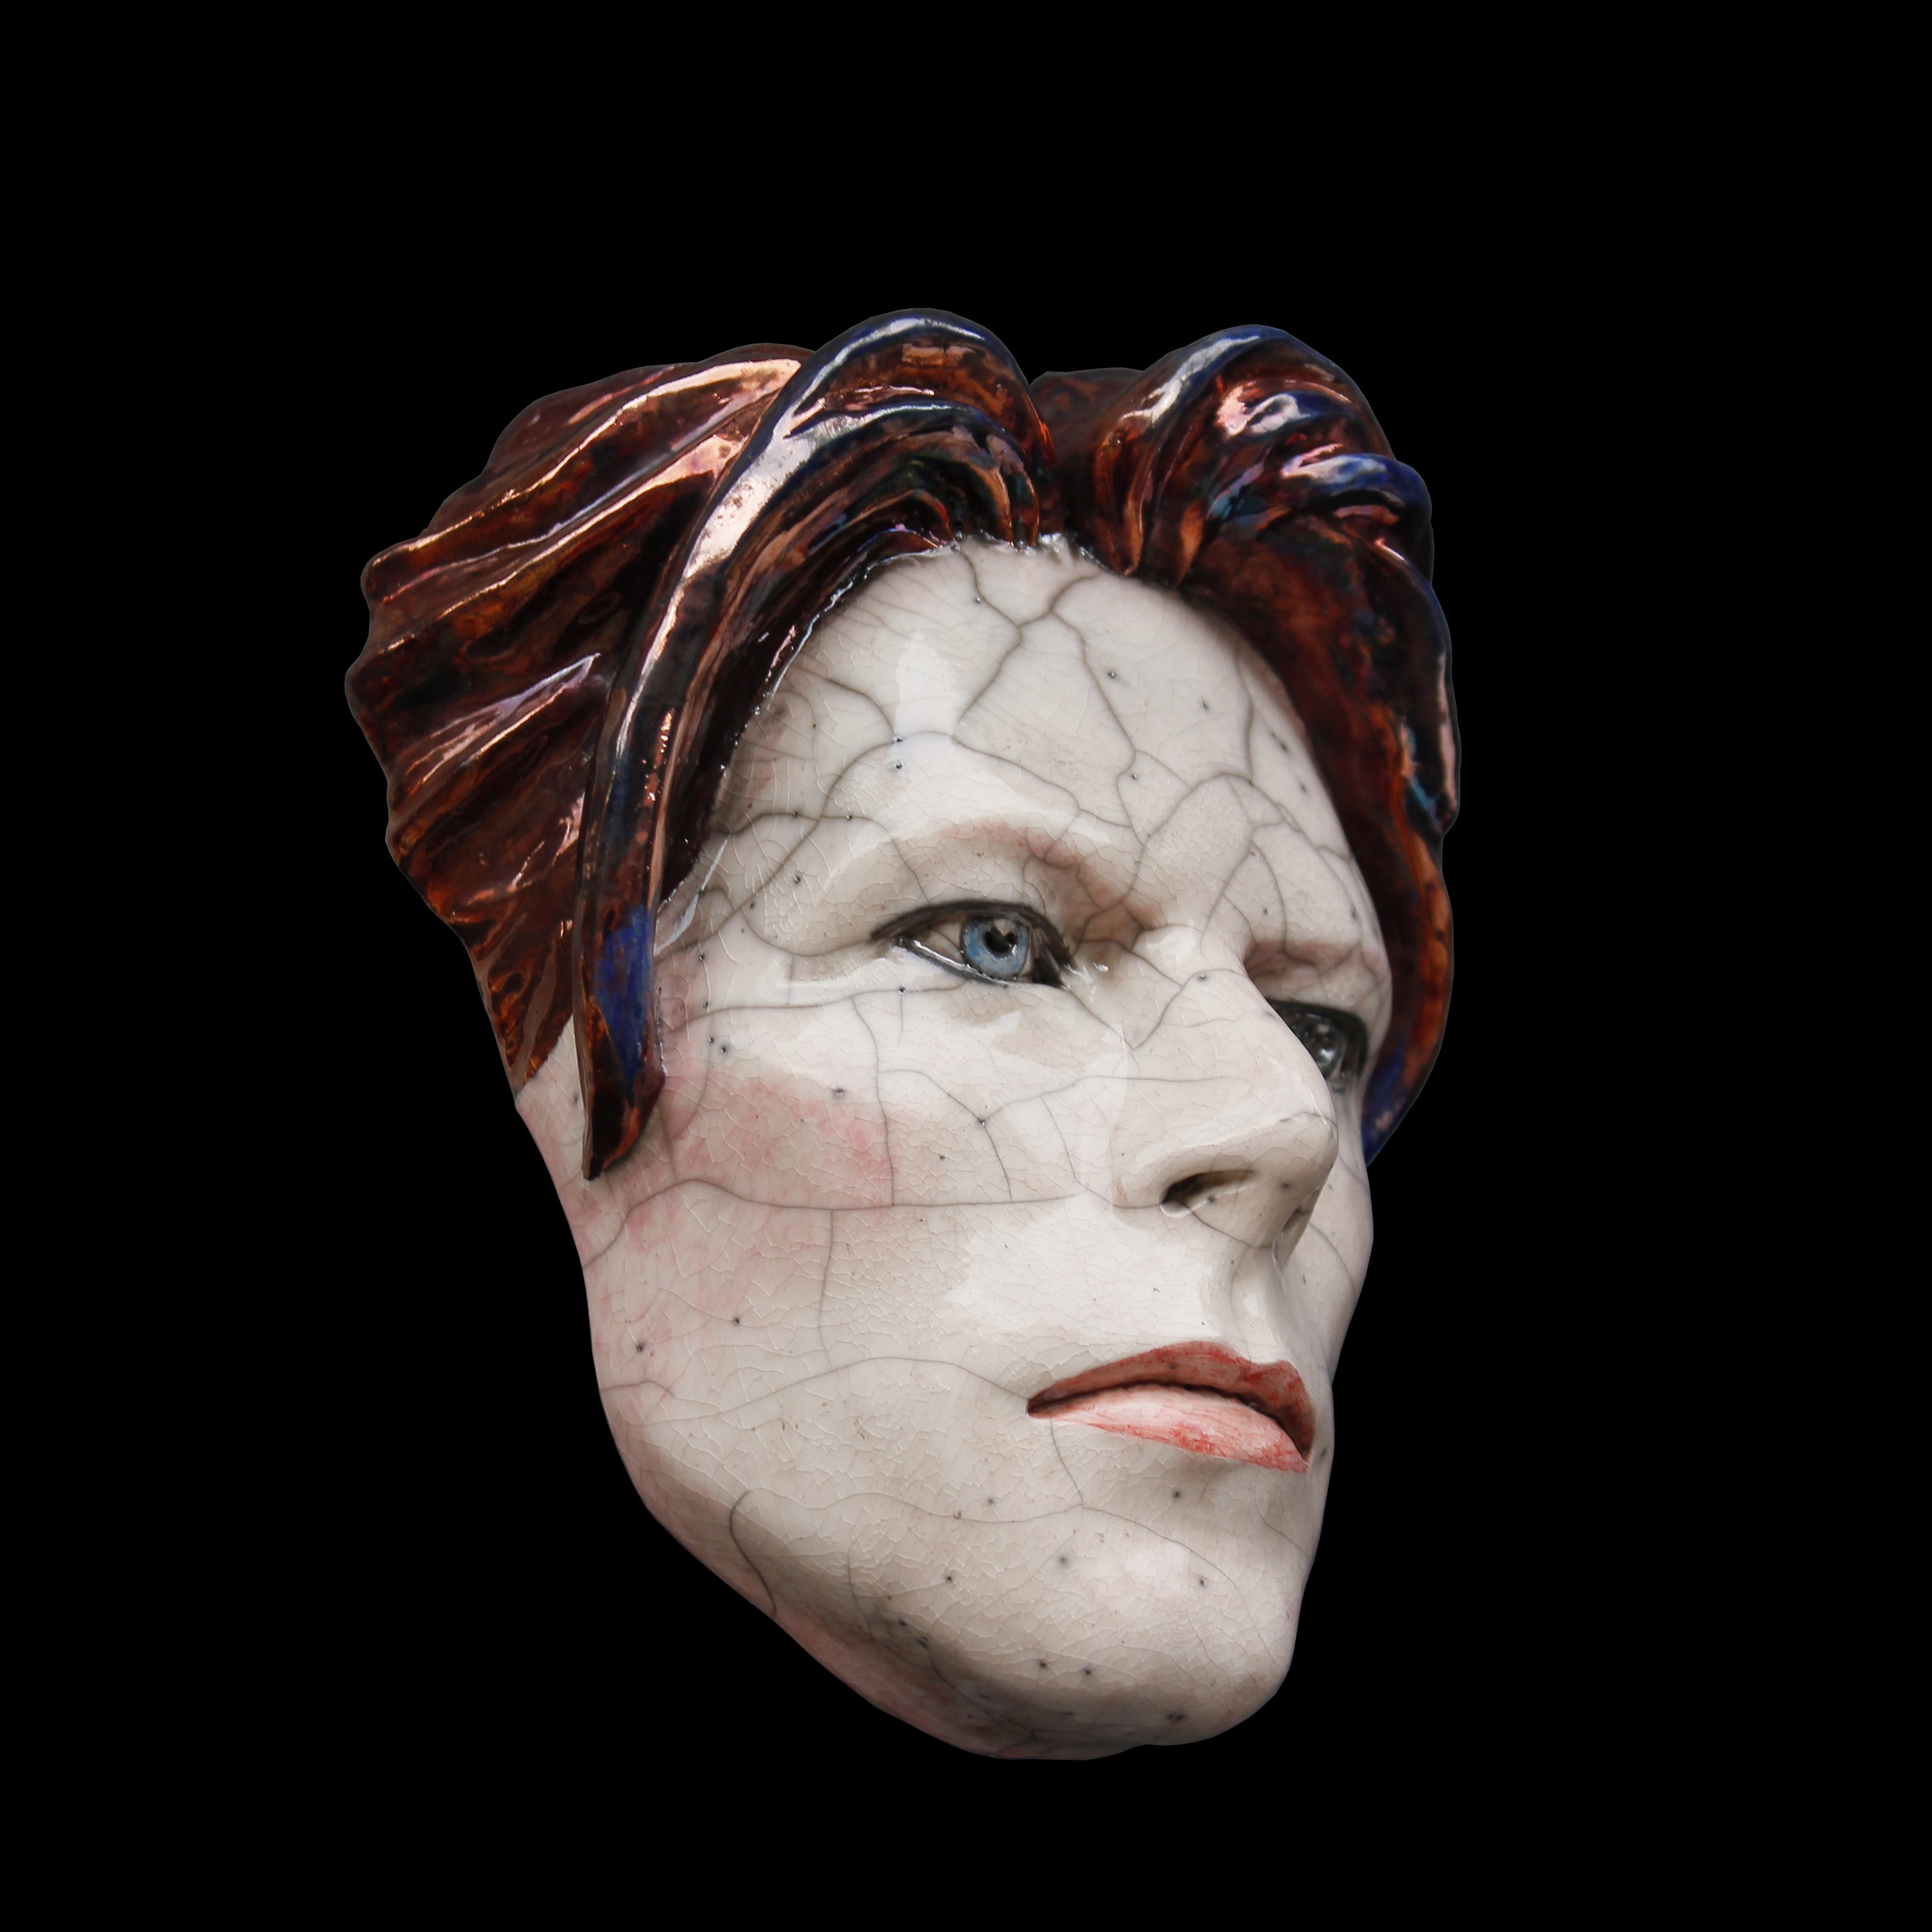 David Bowie Portrait mask made of raku ceramic by Maria Primolan Sculptor